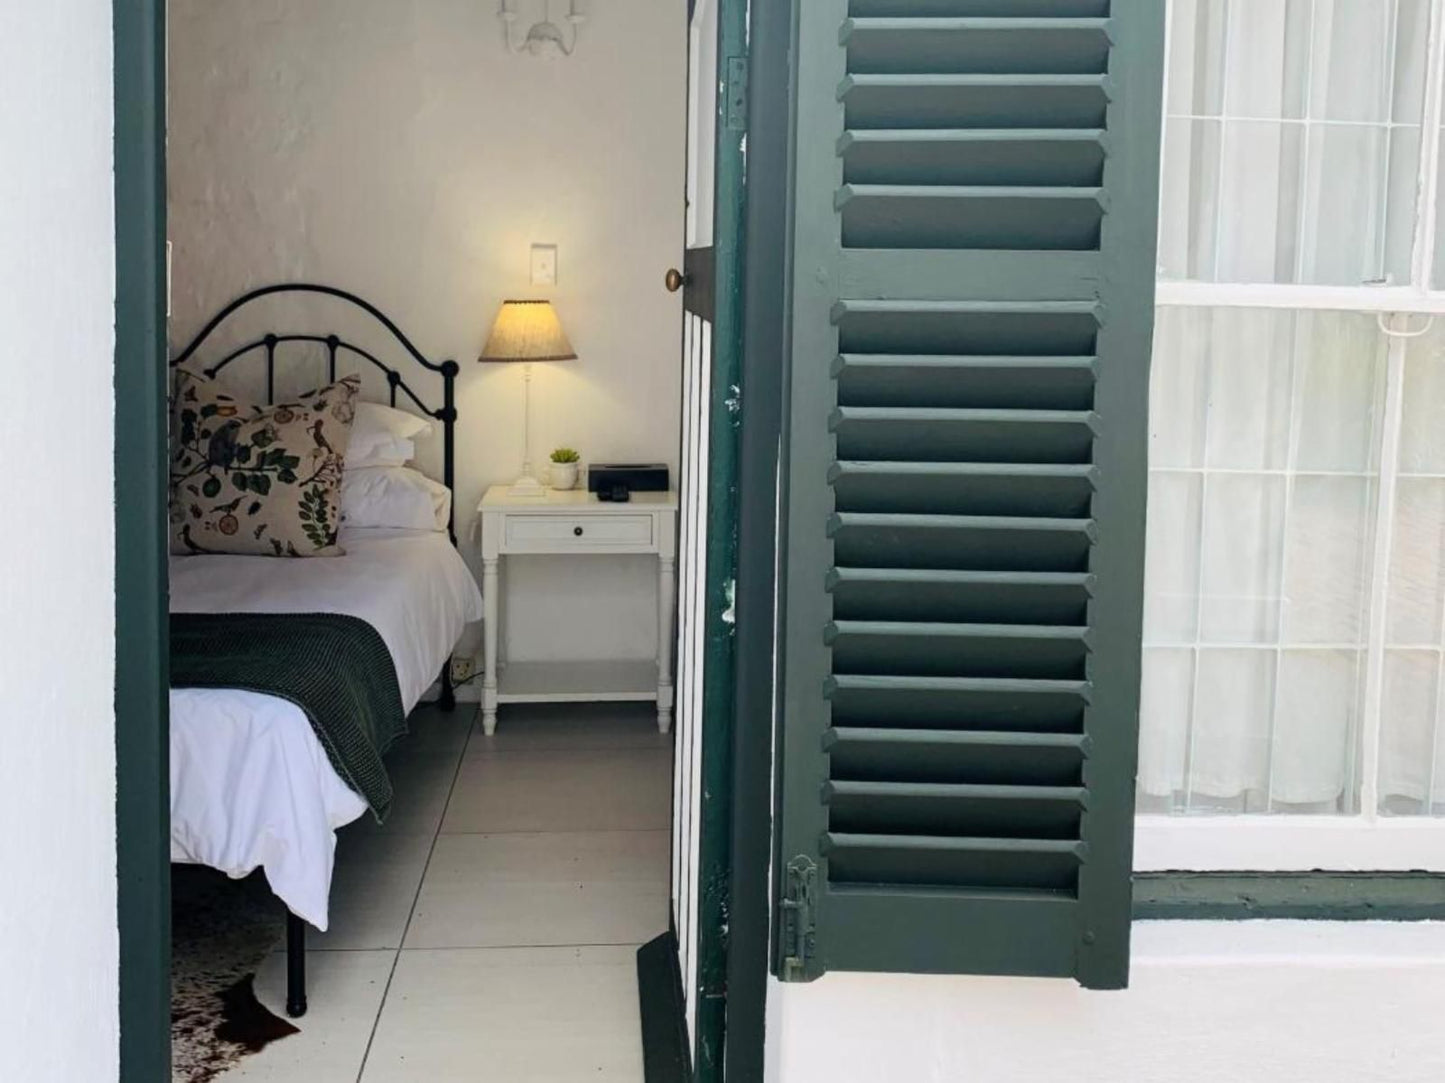 De Wingerd Graaff Reinet Eastern Cape South Africa Bedroom